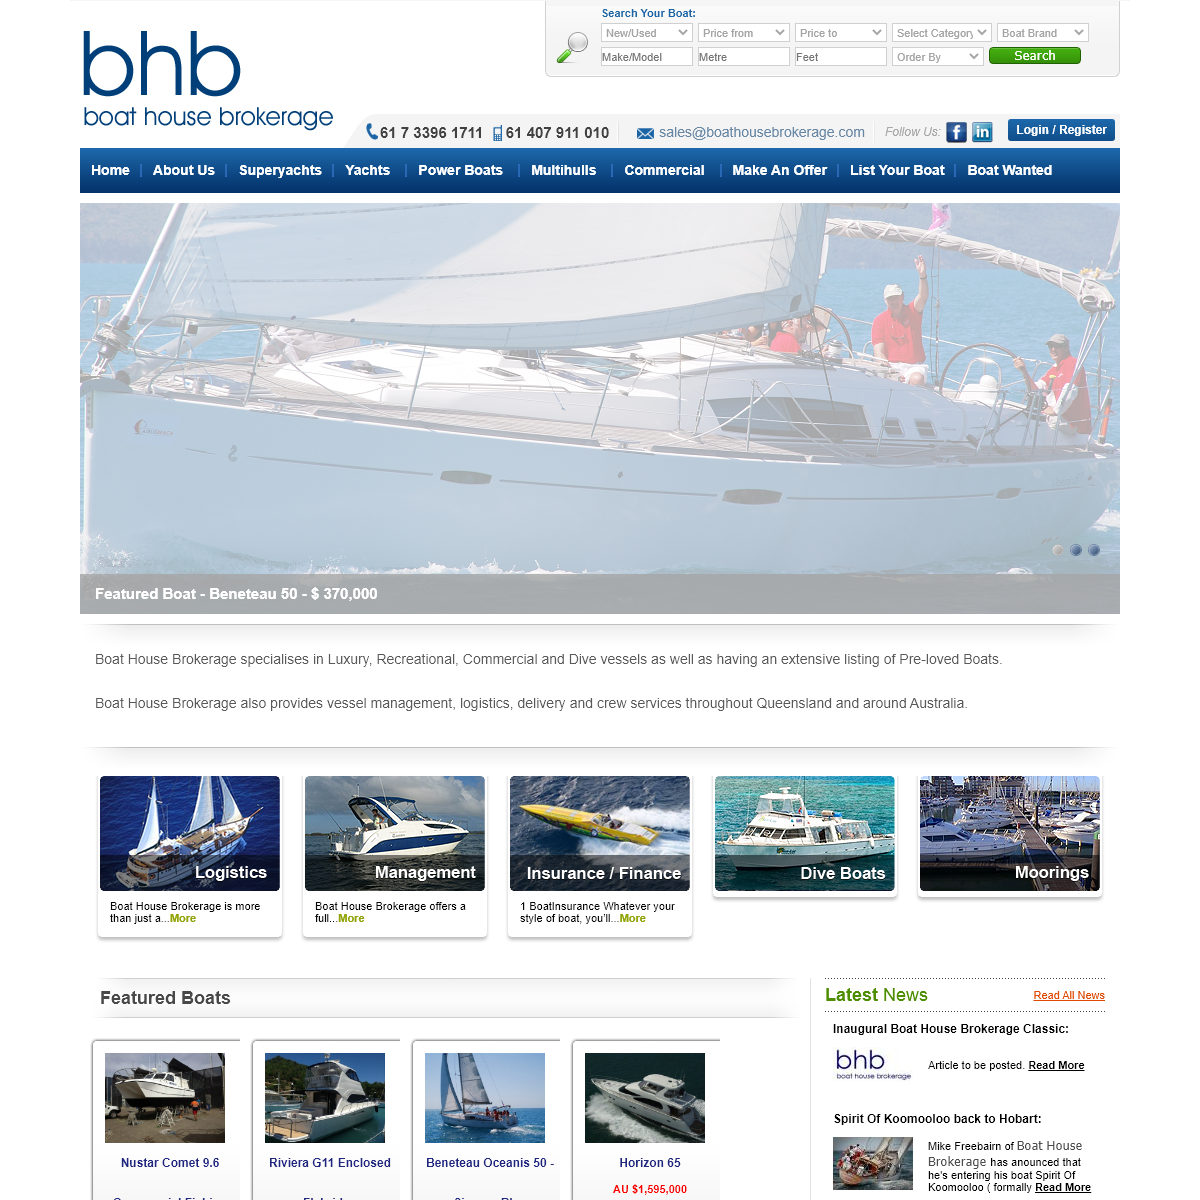 A complete backup of boathousebrokerage.com